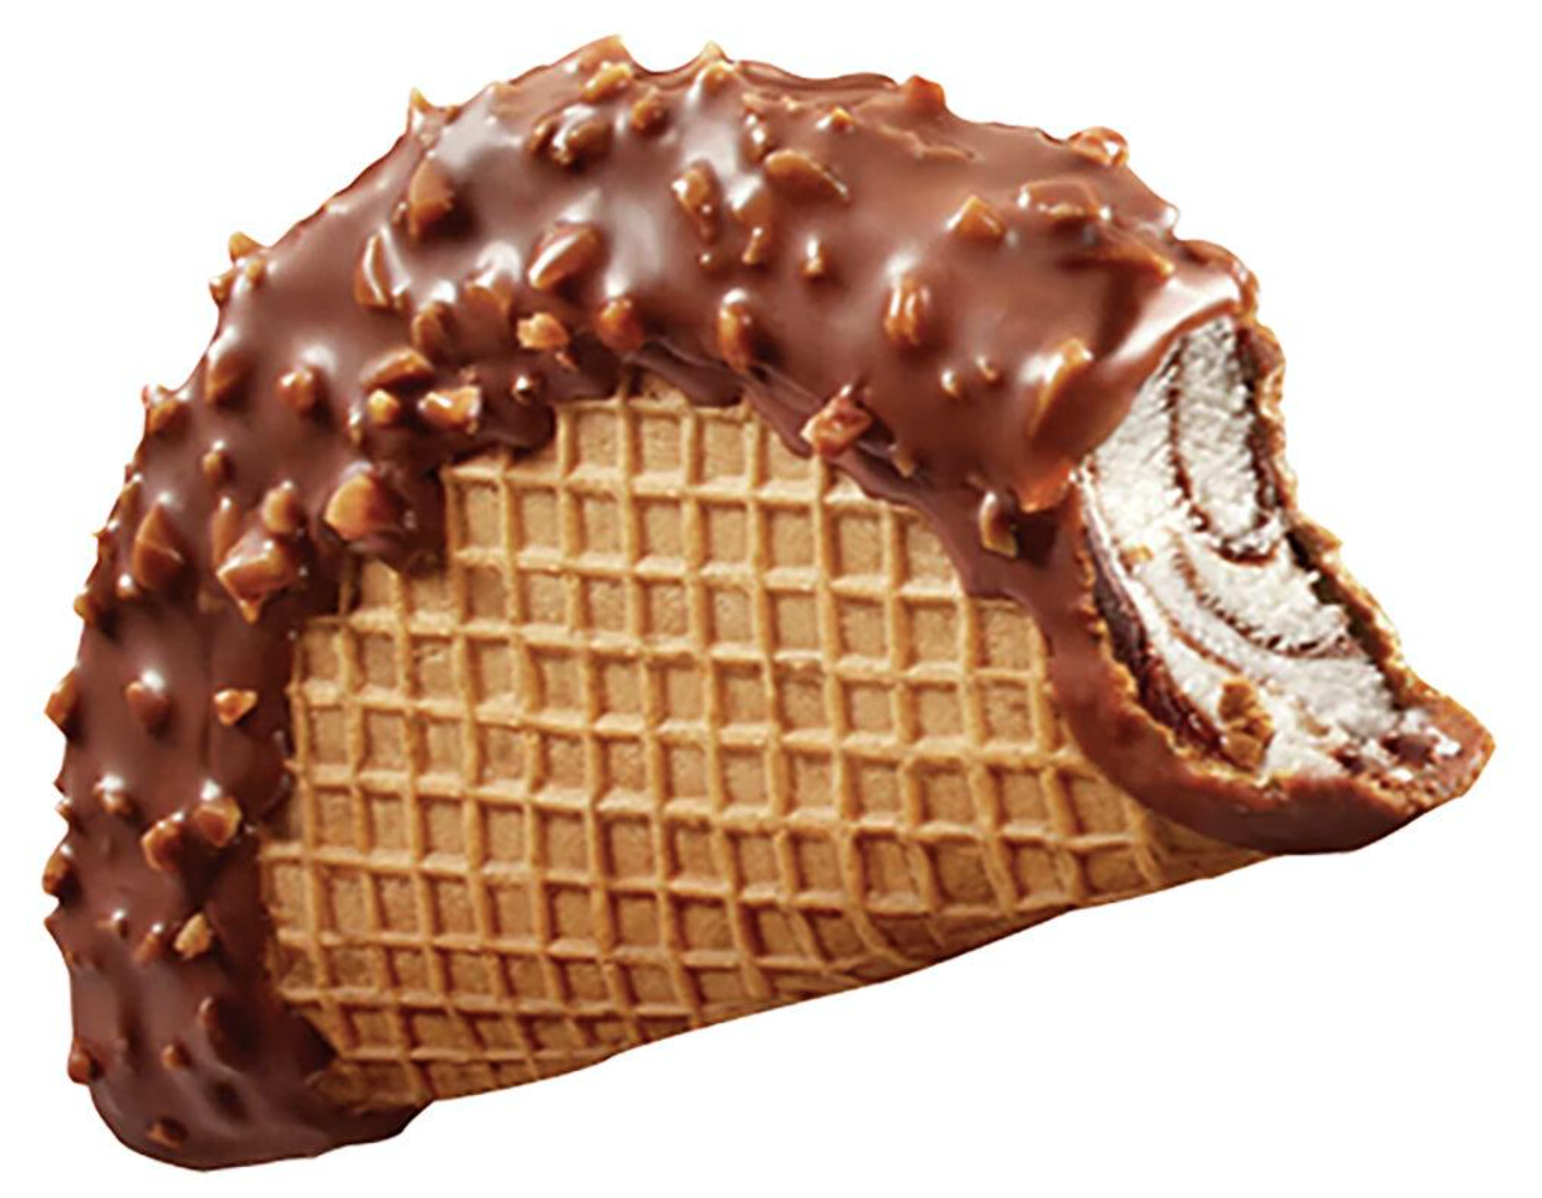 Choco Taco ice cream treat